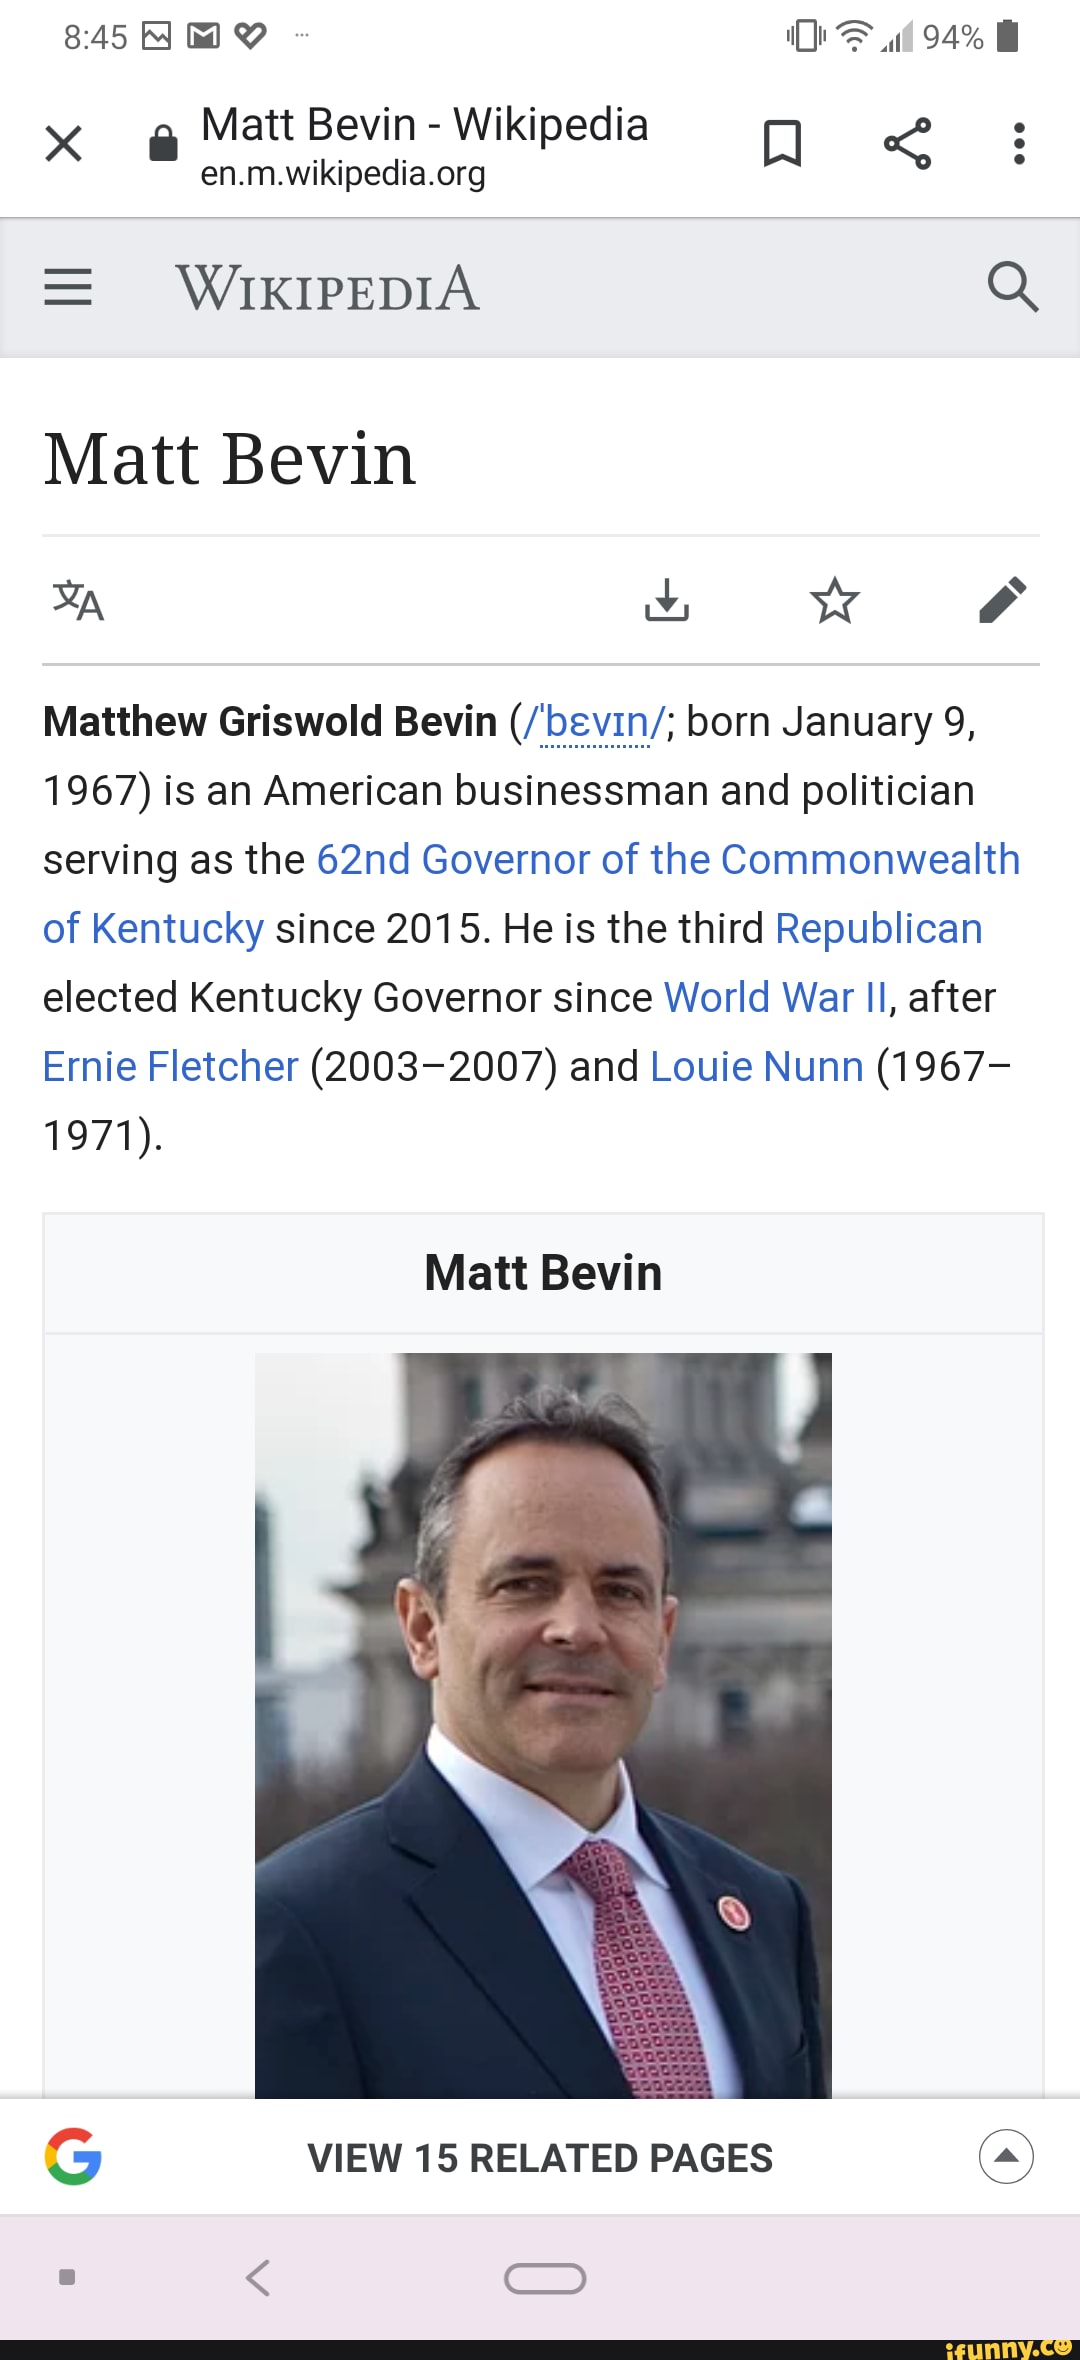 Head of the Commonwealth - Wikipedia